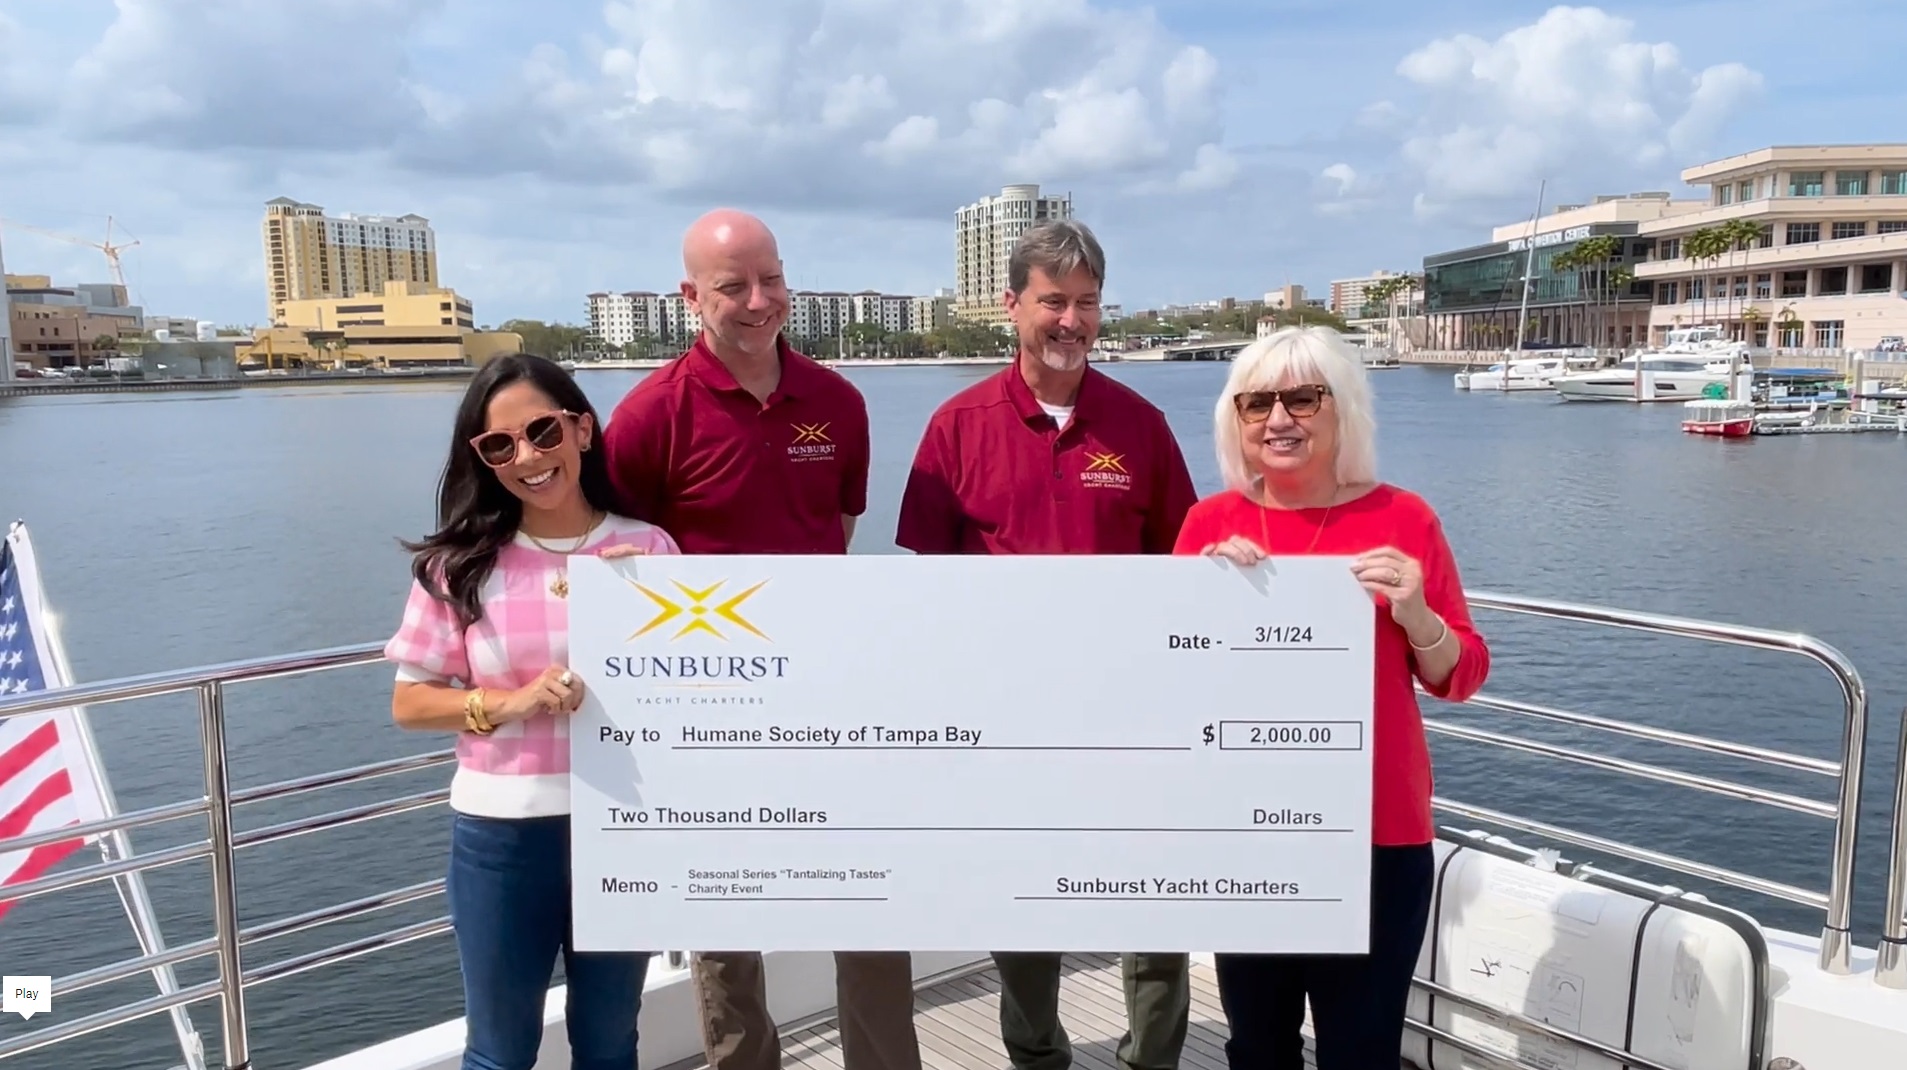 Sunburst Yacht Charters donation to Humane Society Tampa Bay